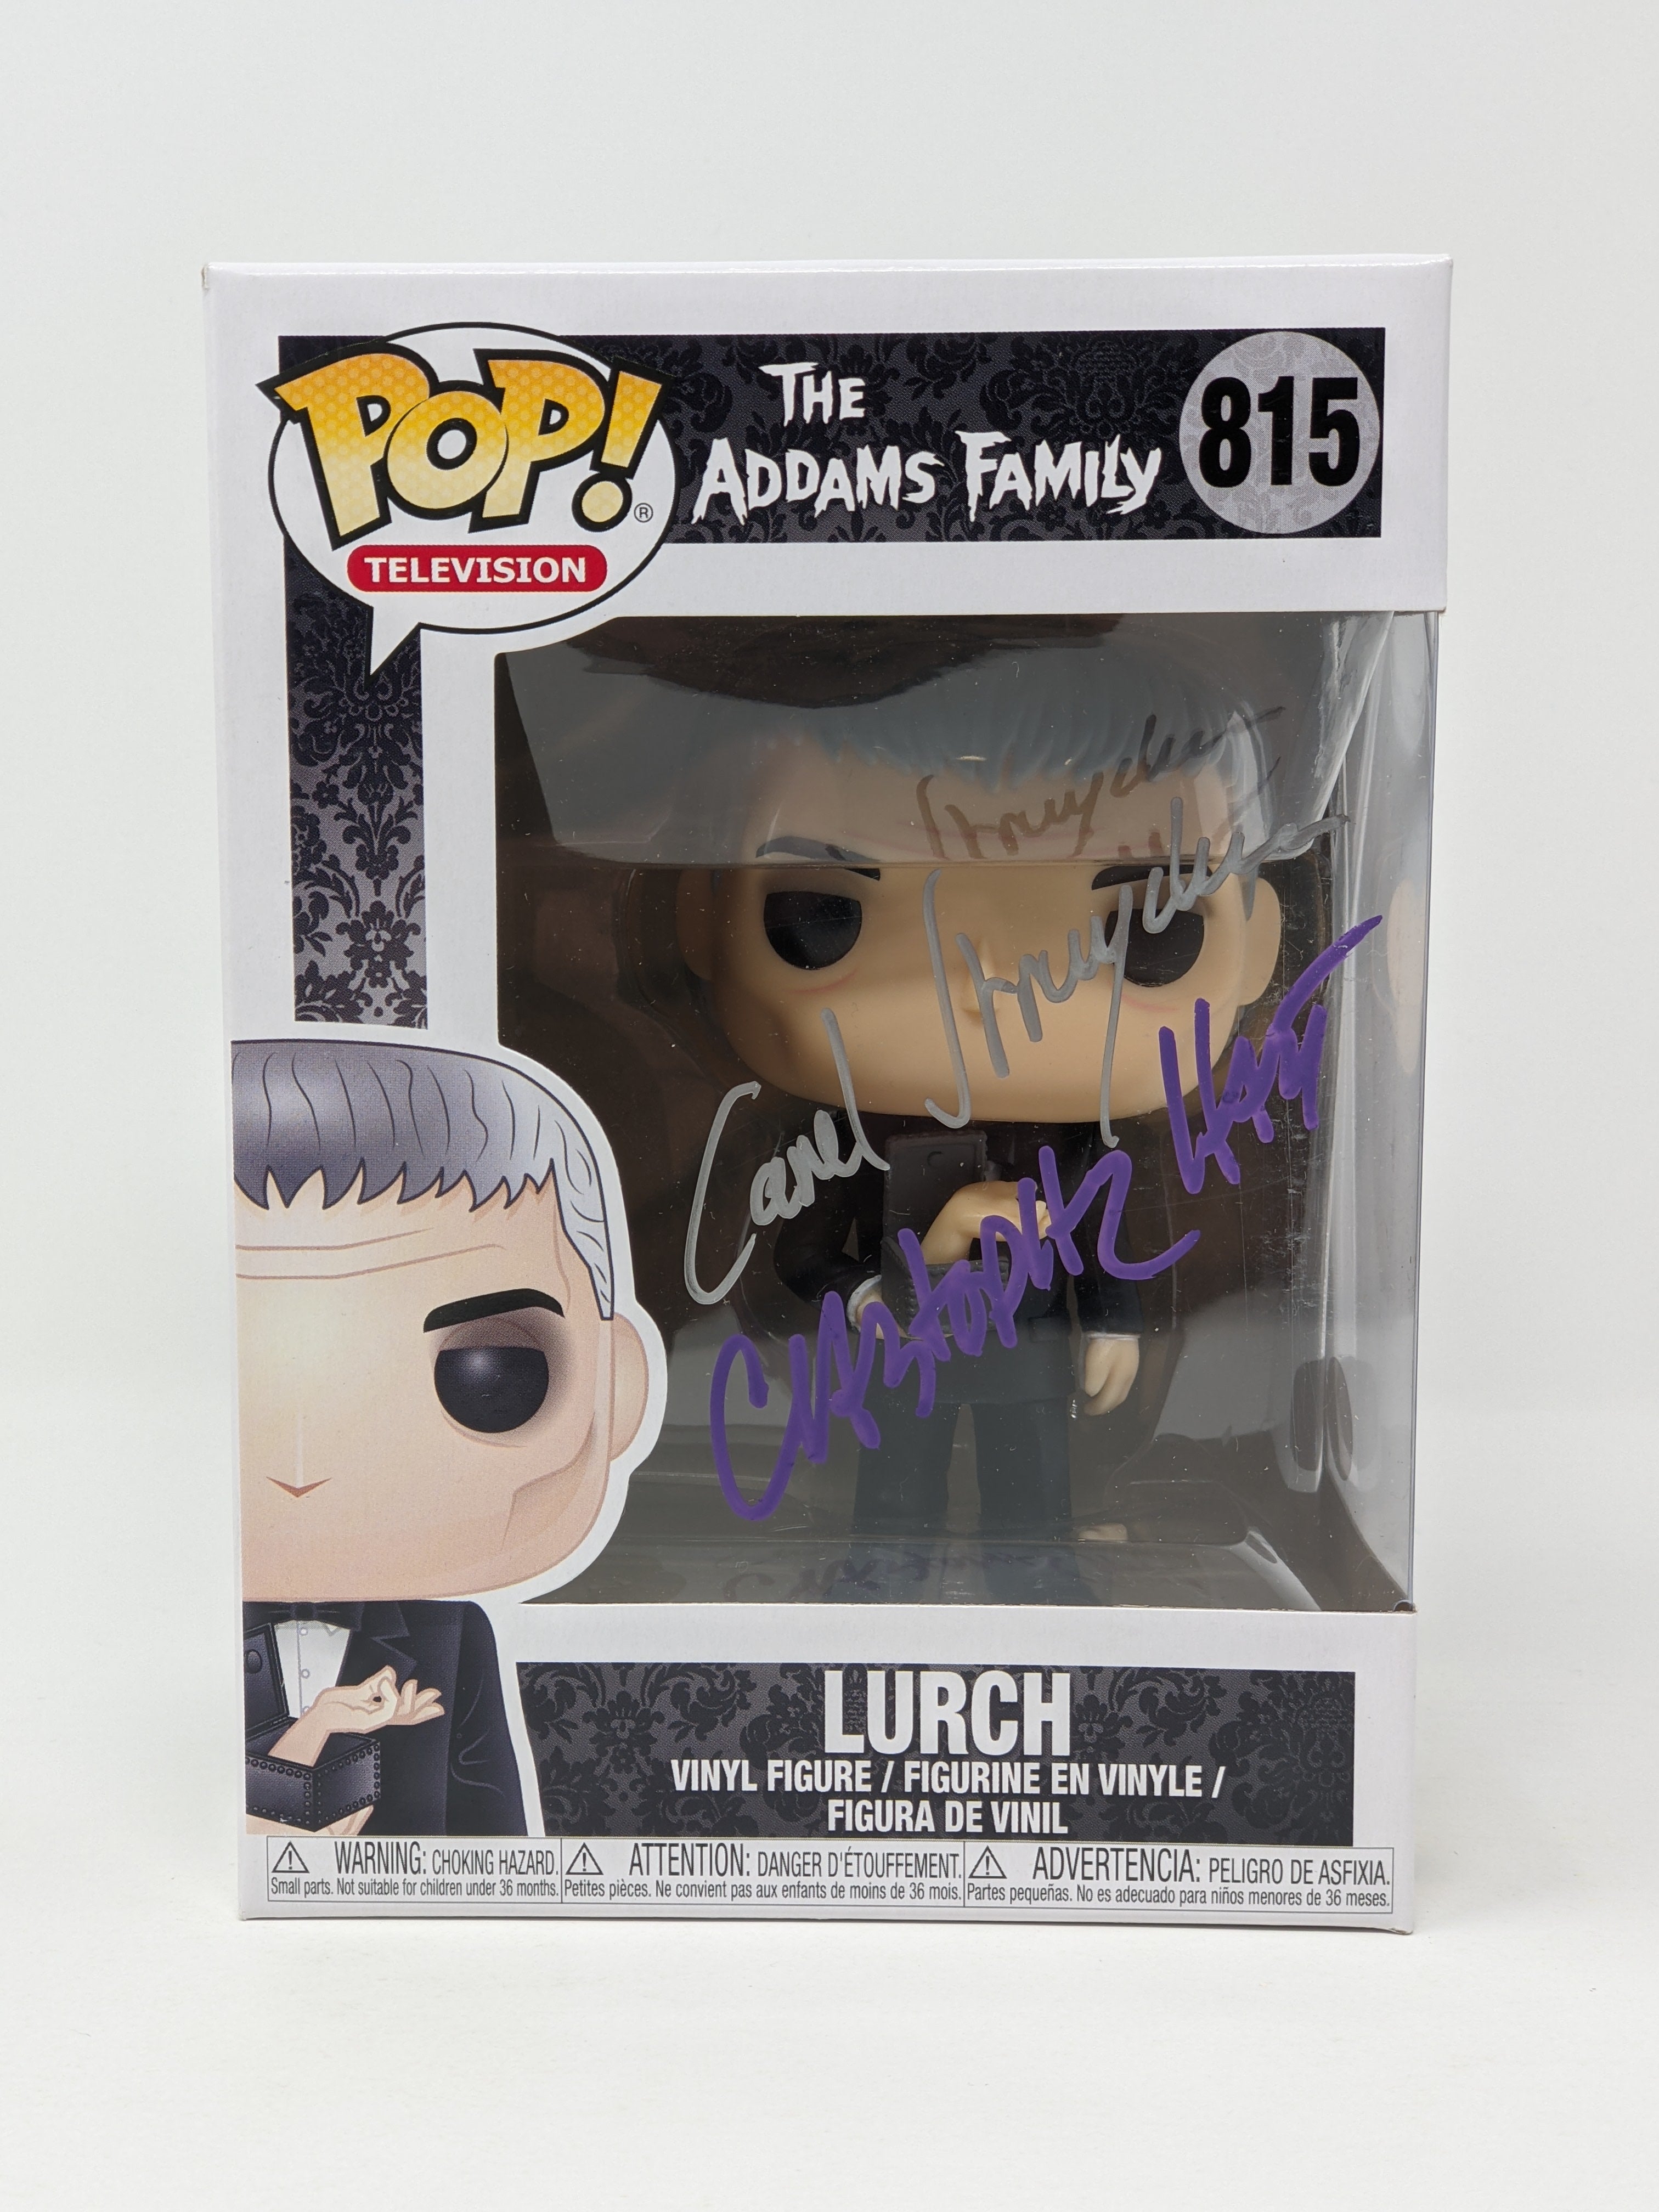 Addams Family Lurch #815 Cast x2 Hart Struycken Signed Funko Pop JSA COA Certified Autograph